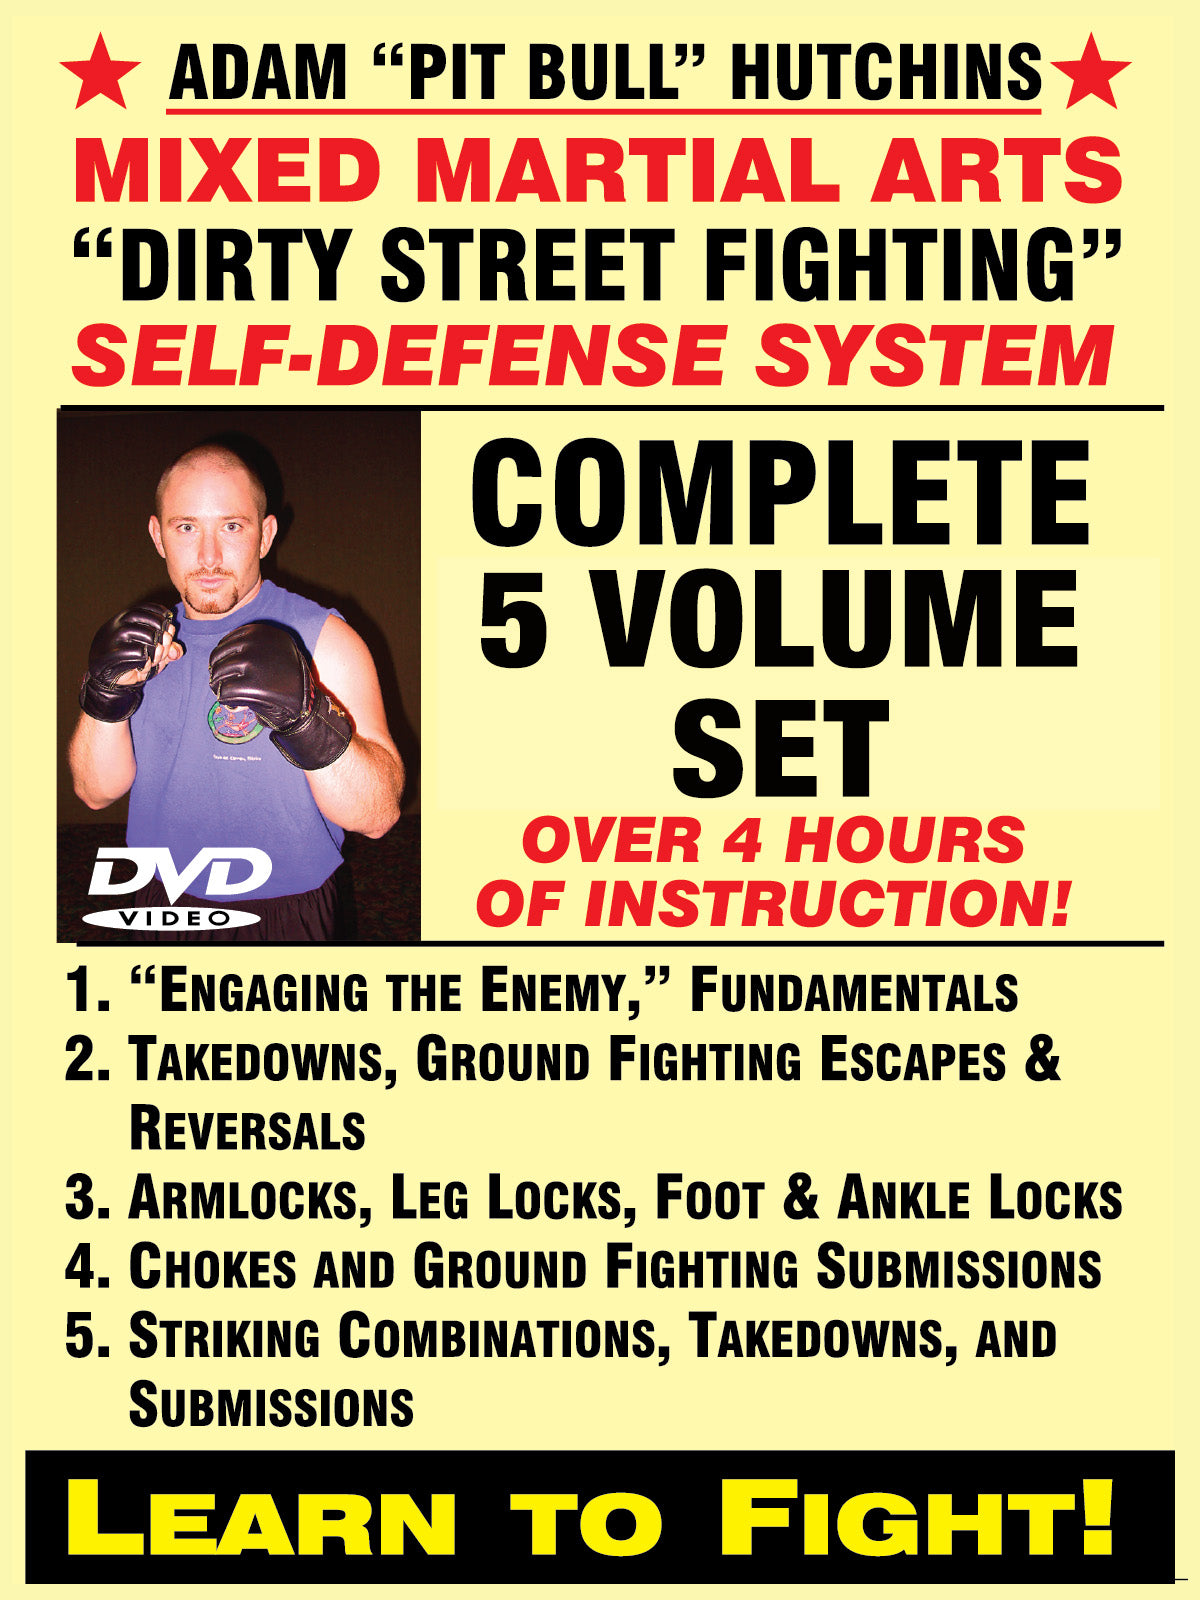 Serie Dirty Street Fighting con Adam Hutchins (bajo demanda)